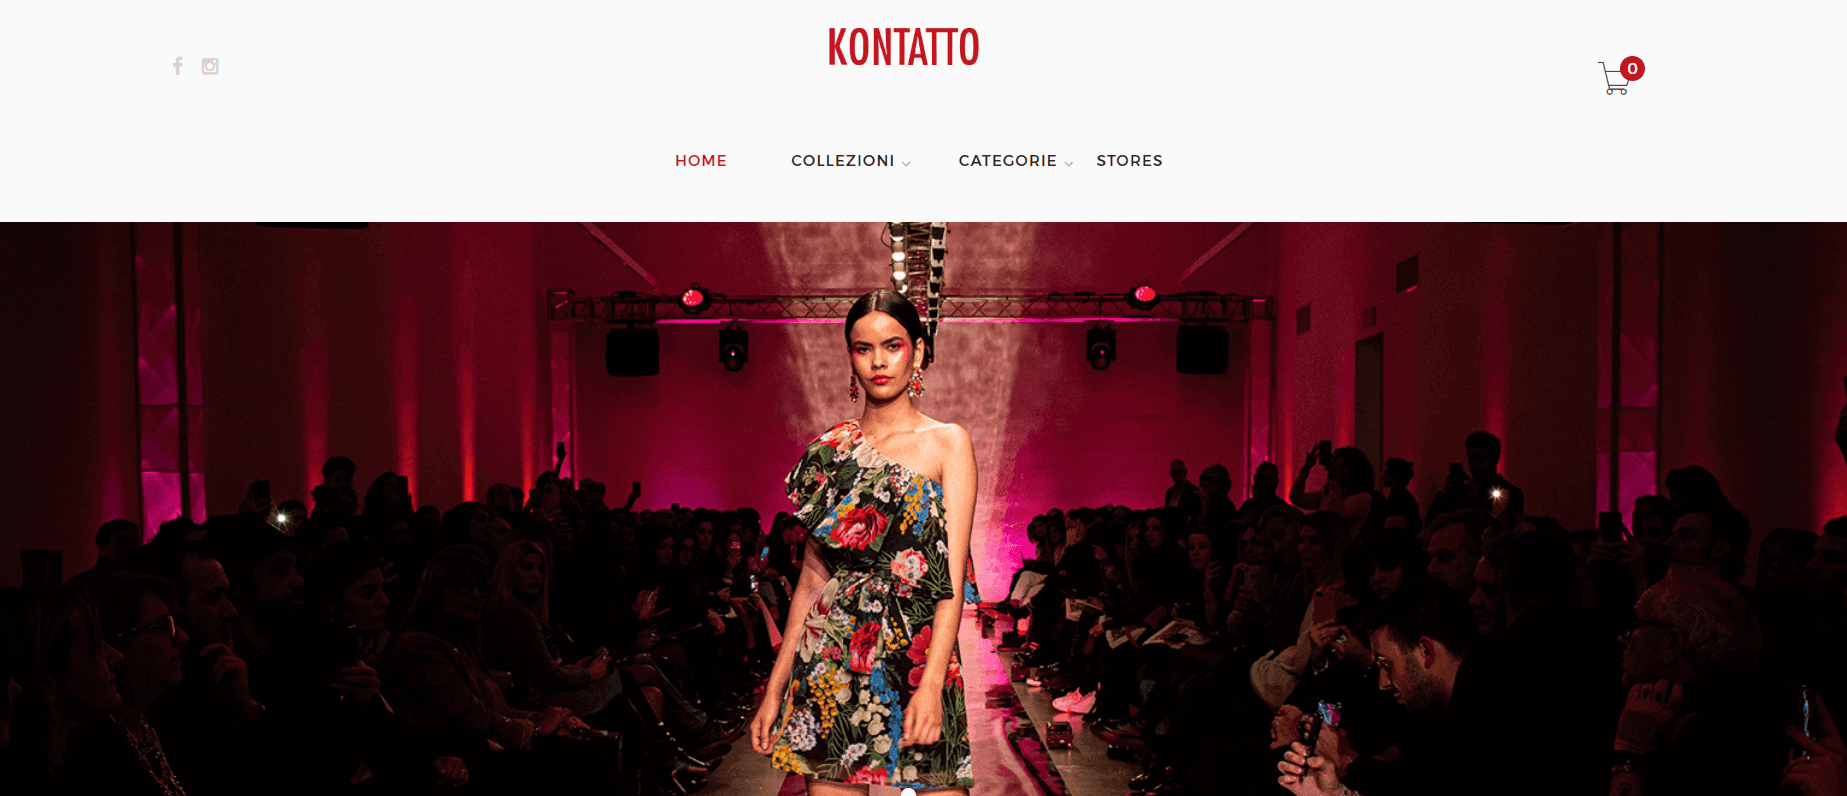 Kontatto купить онлайн с доставкой в Казахстан - Meest Shopping - 2